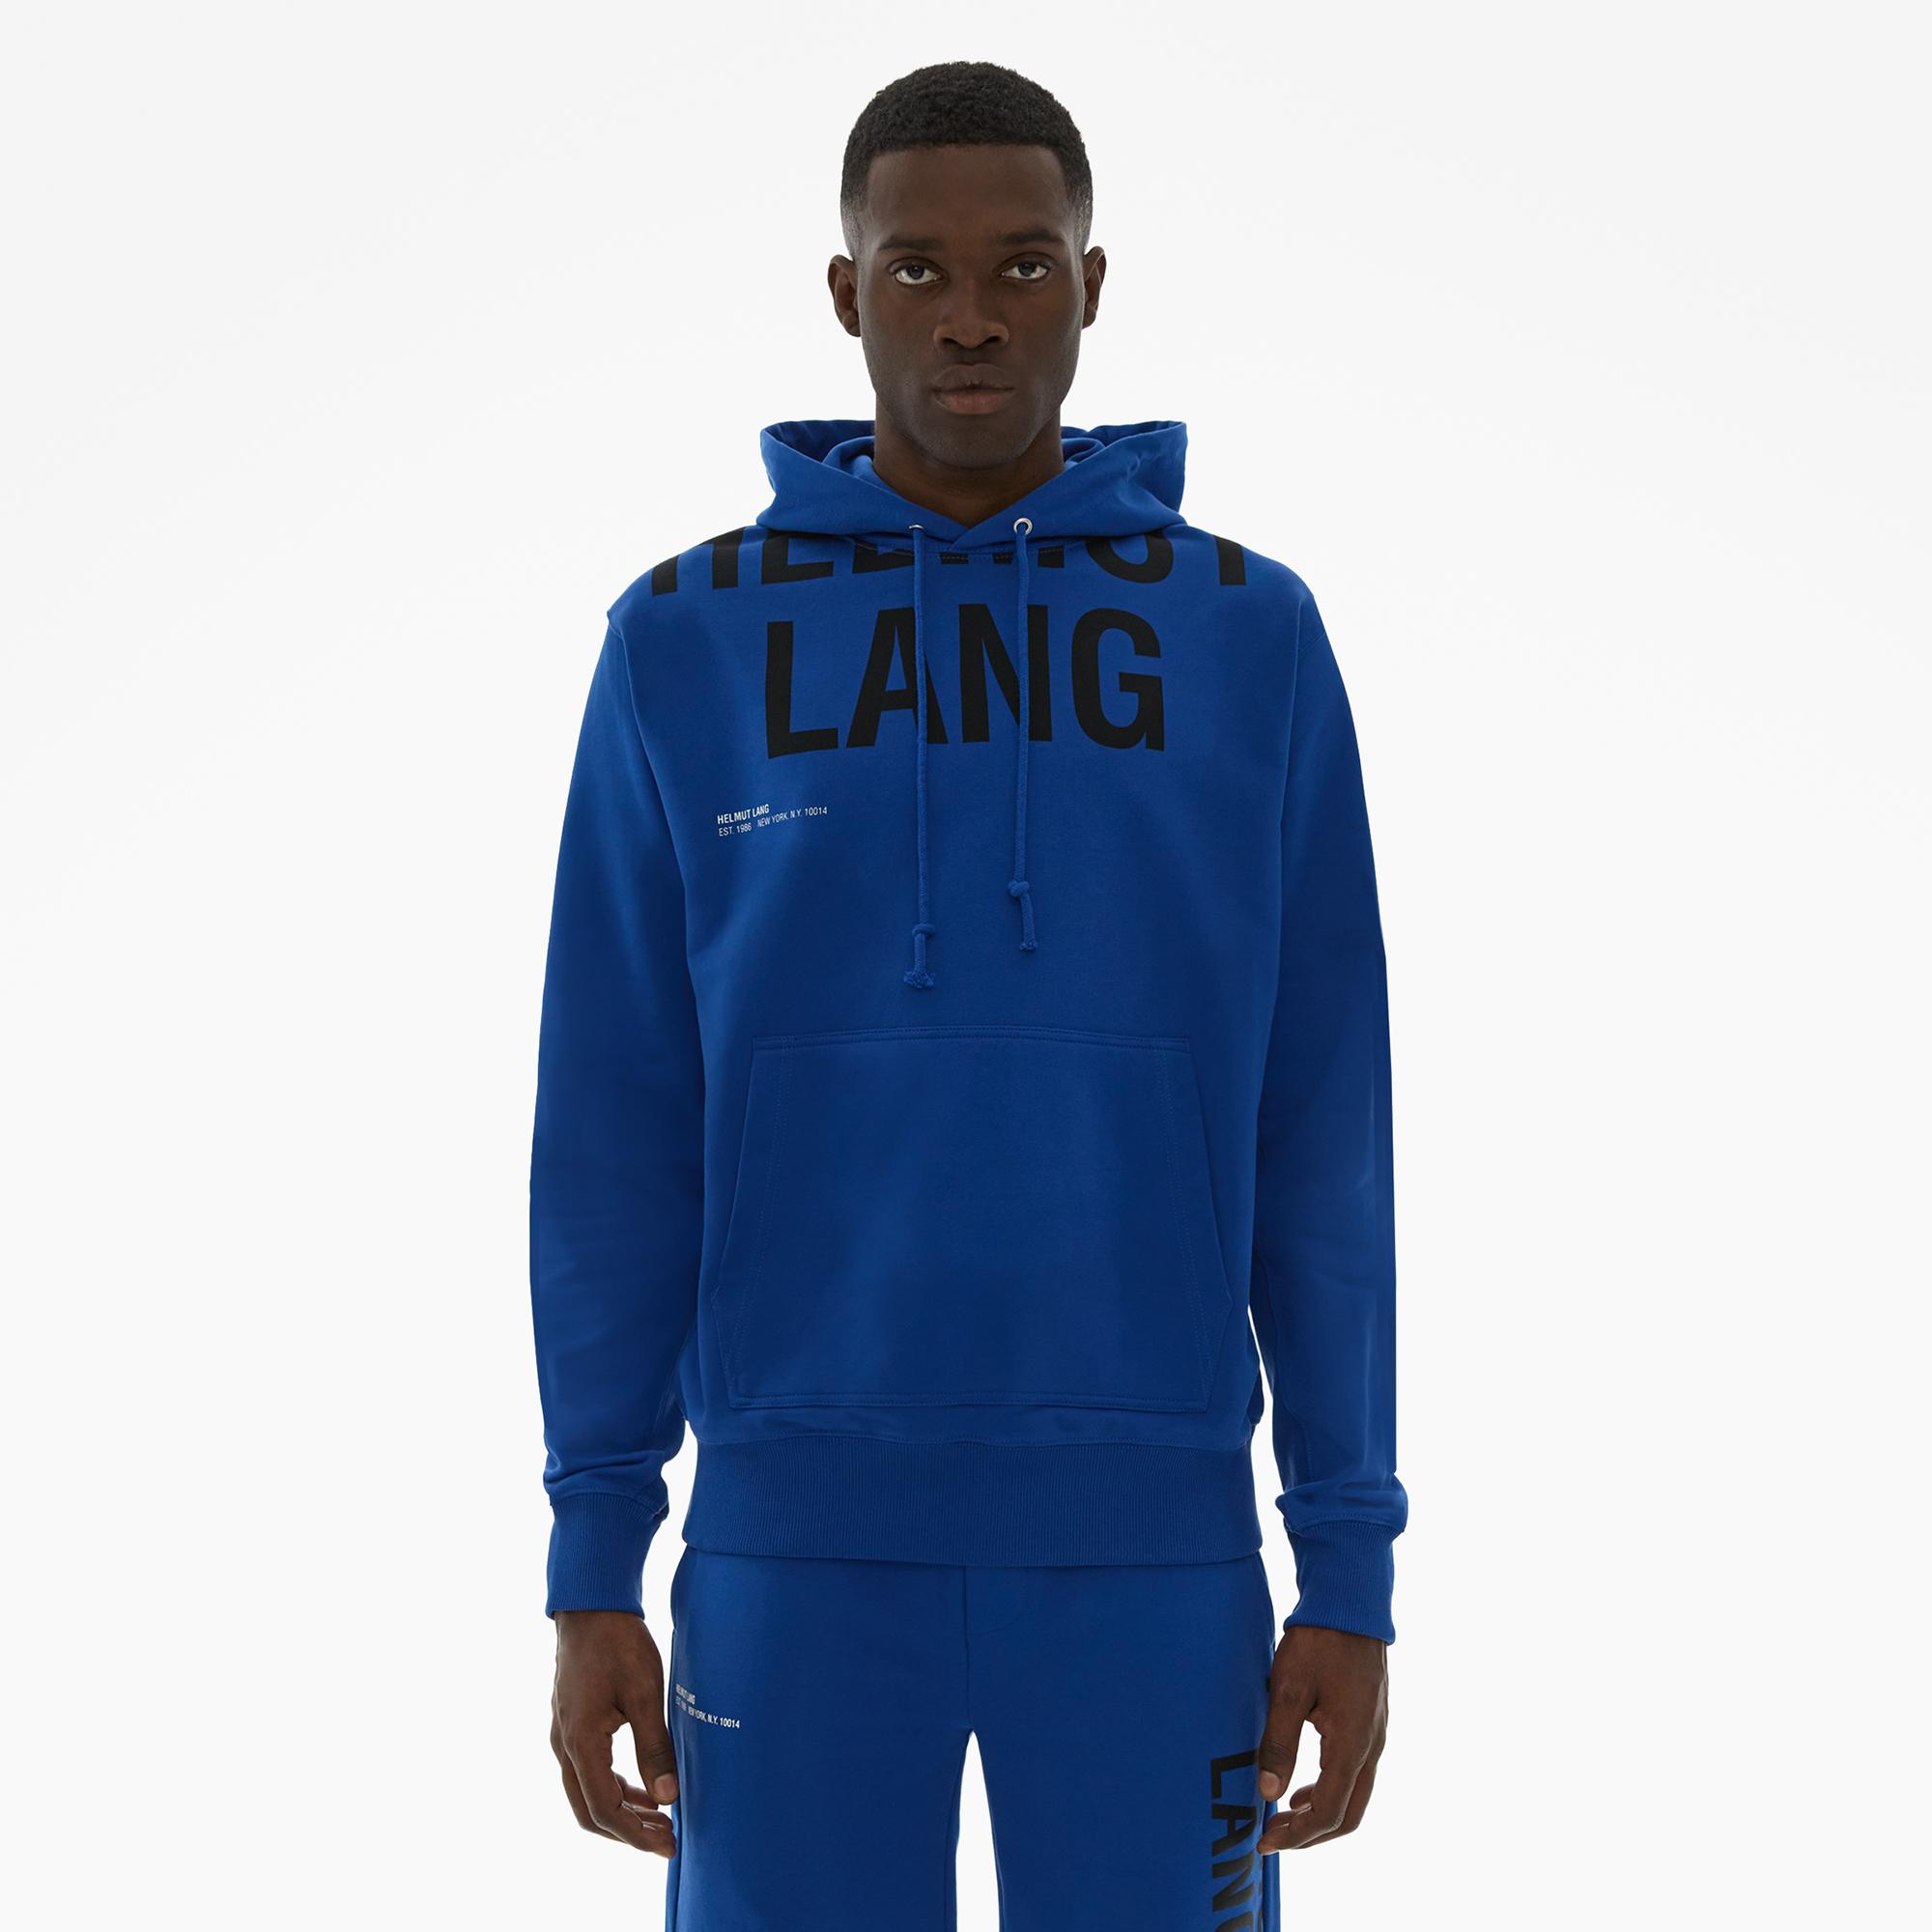 Helmut Lang Men's Sweatshirt | WWW.HELMUTLANG.COM